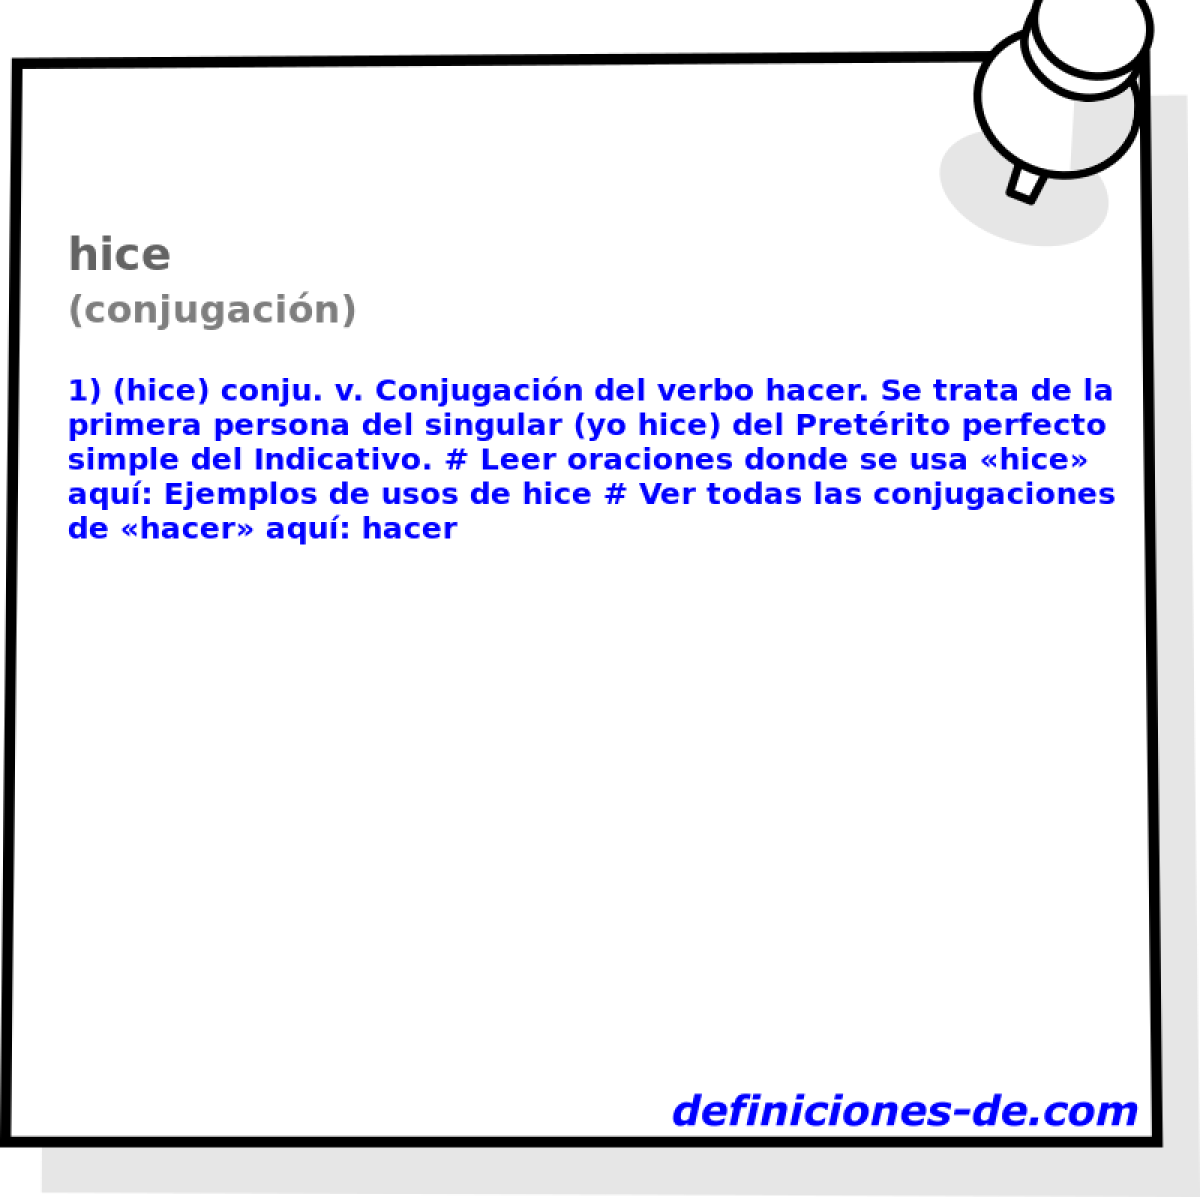 hice (conjugacin)